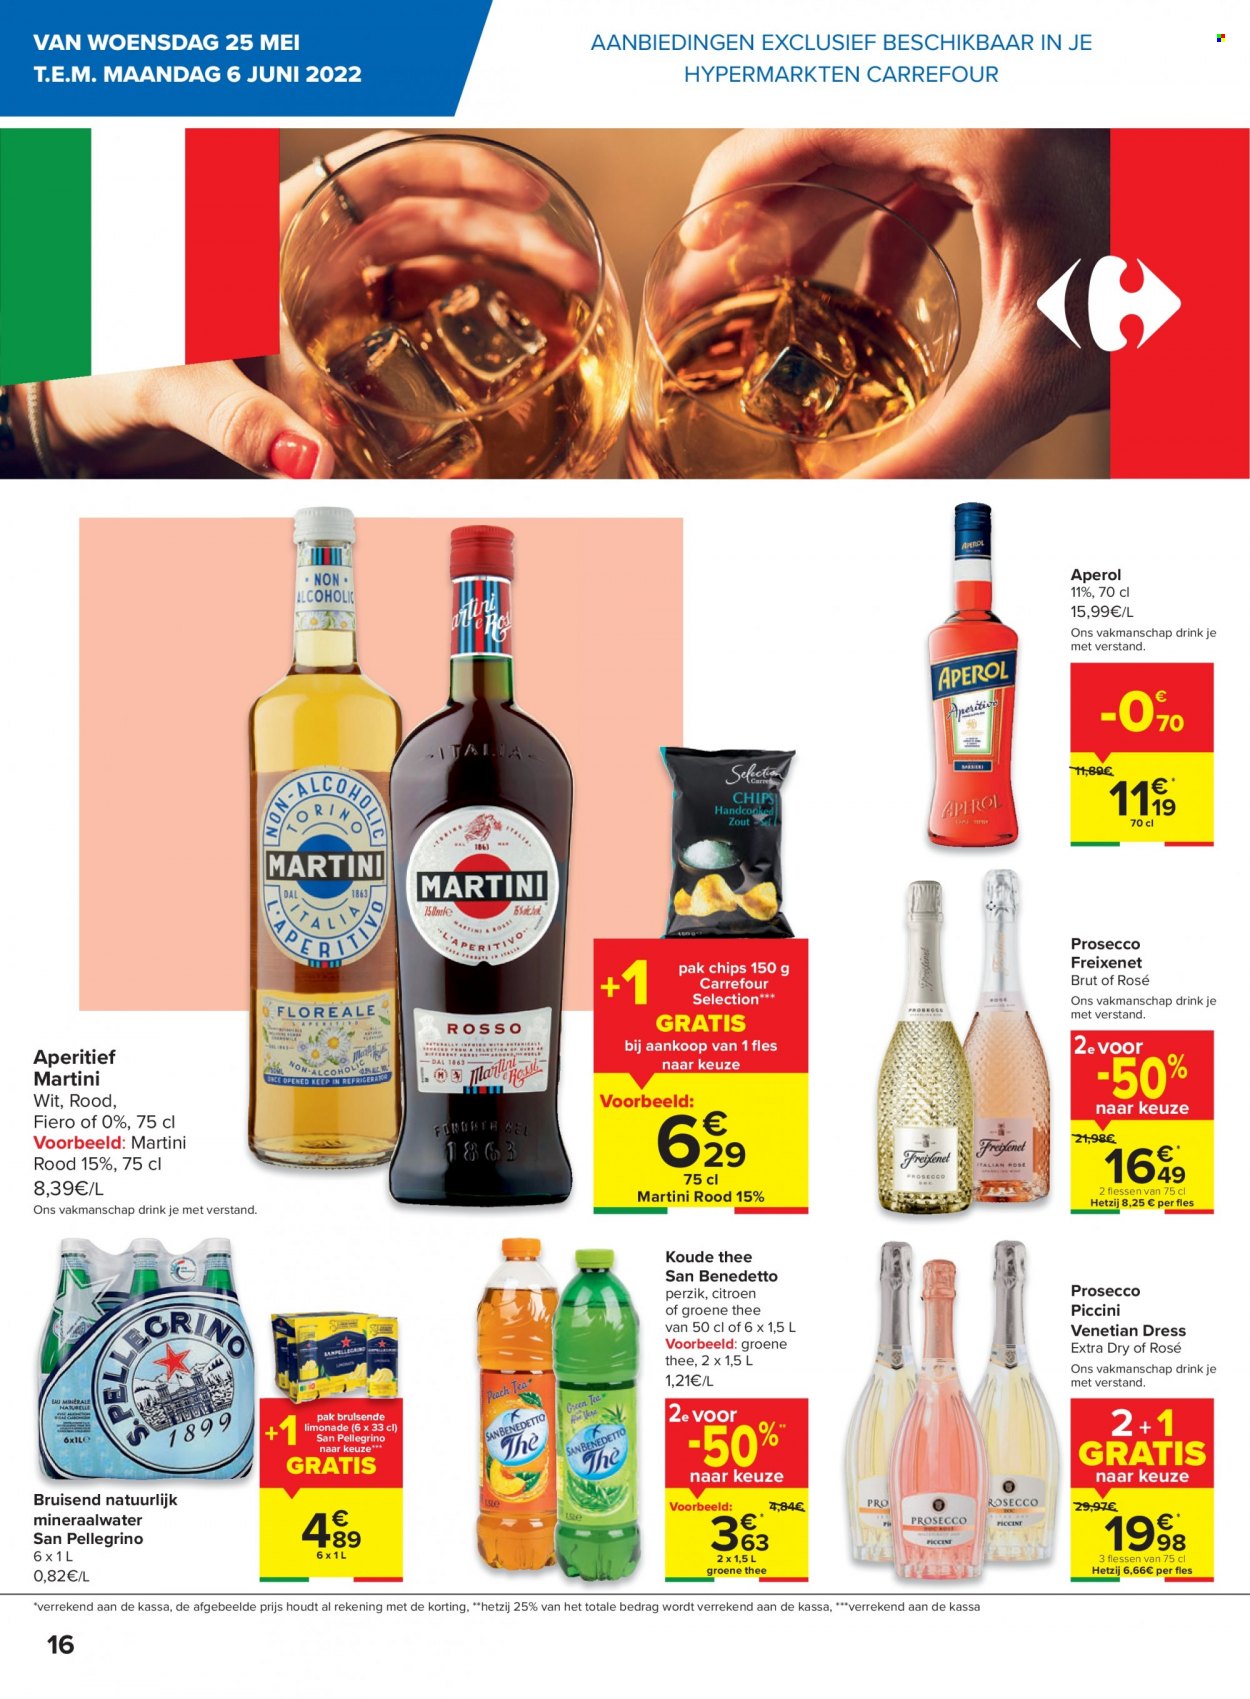 thumbnail - Carrefour hypermarkt-aanbieding - 24/05/2022 - 30/05/2022 -  producten in de aanbieding - citroen, perzik, chips, mineraalwater, prosecco, Aperol, Martini. Pagina 16.